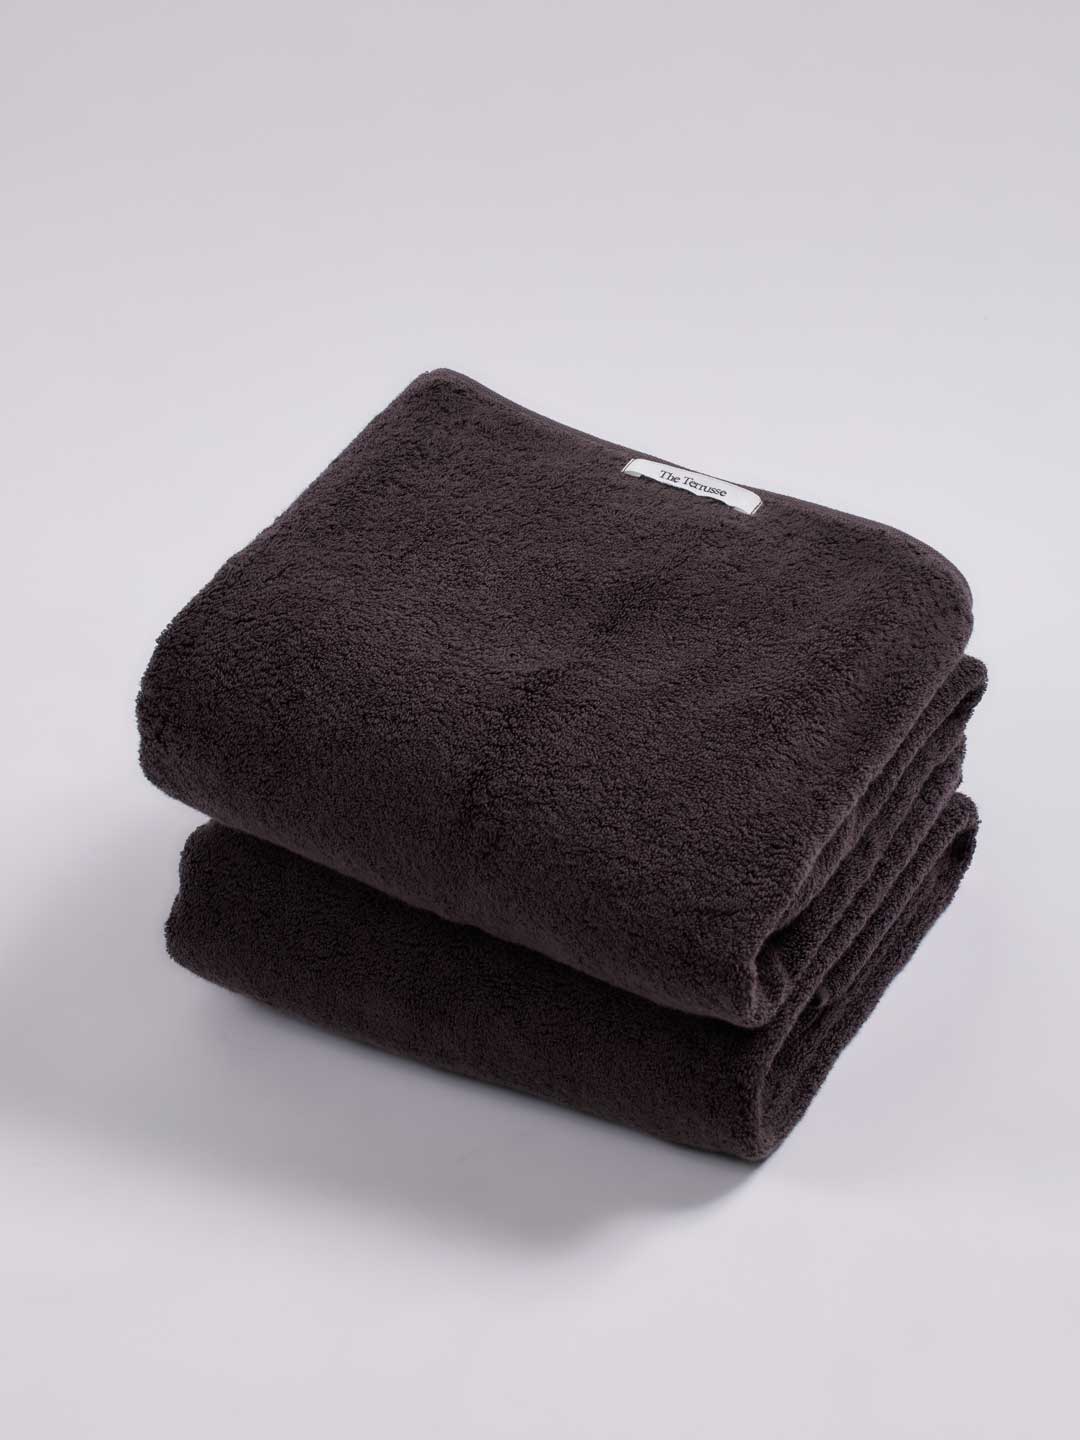 Bath Towel - Extra Volume - Brown